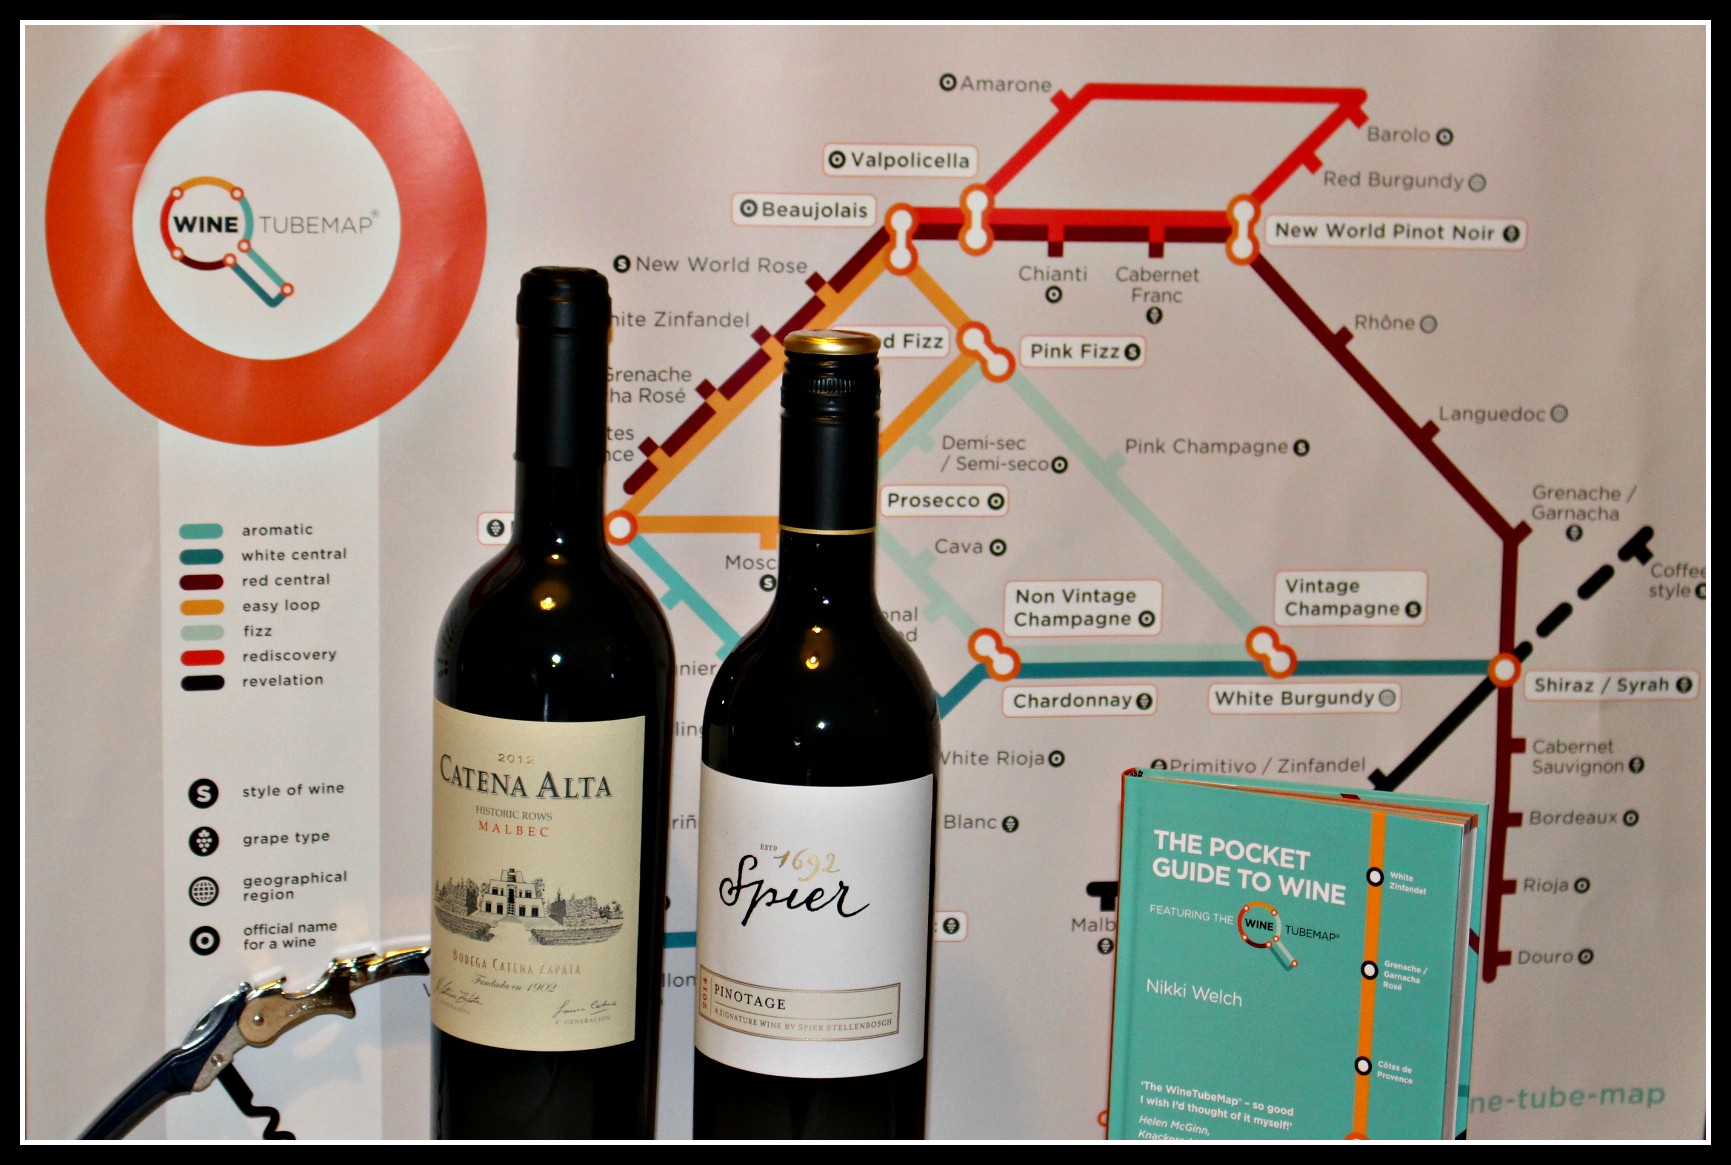 Wine Tube Map, malbec, pinotage, wine